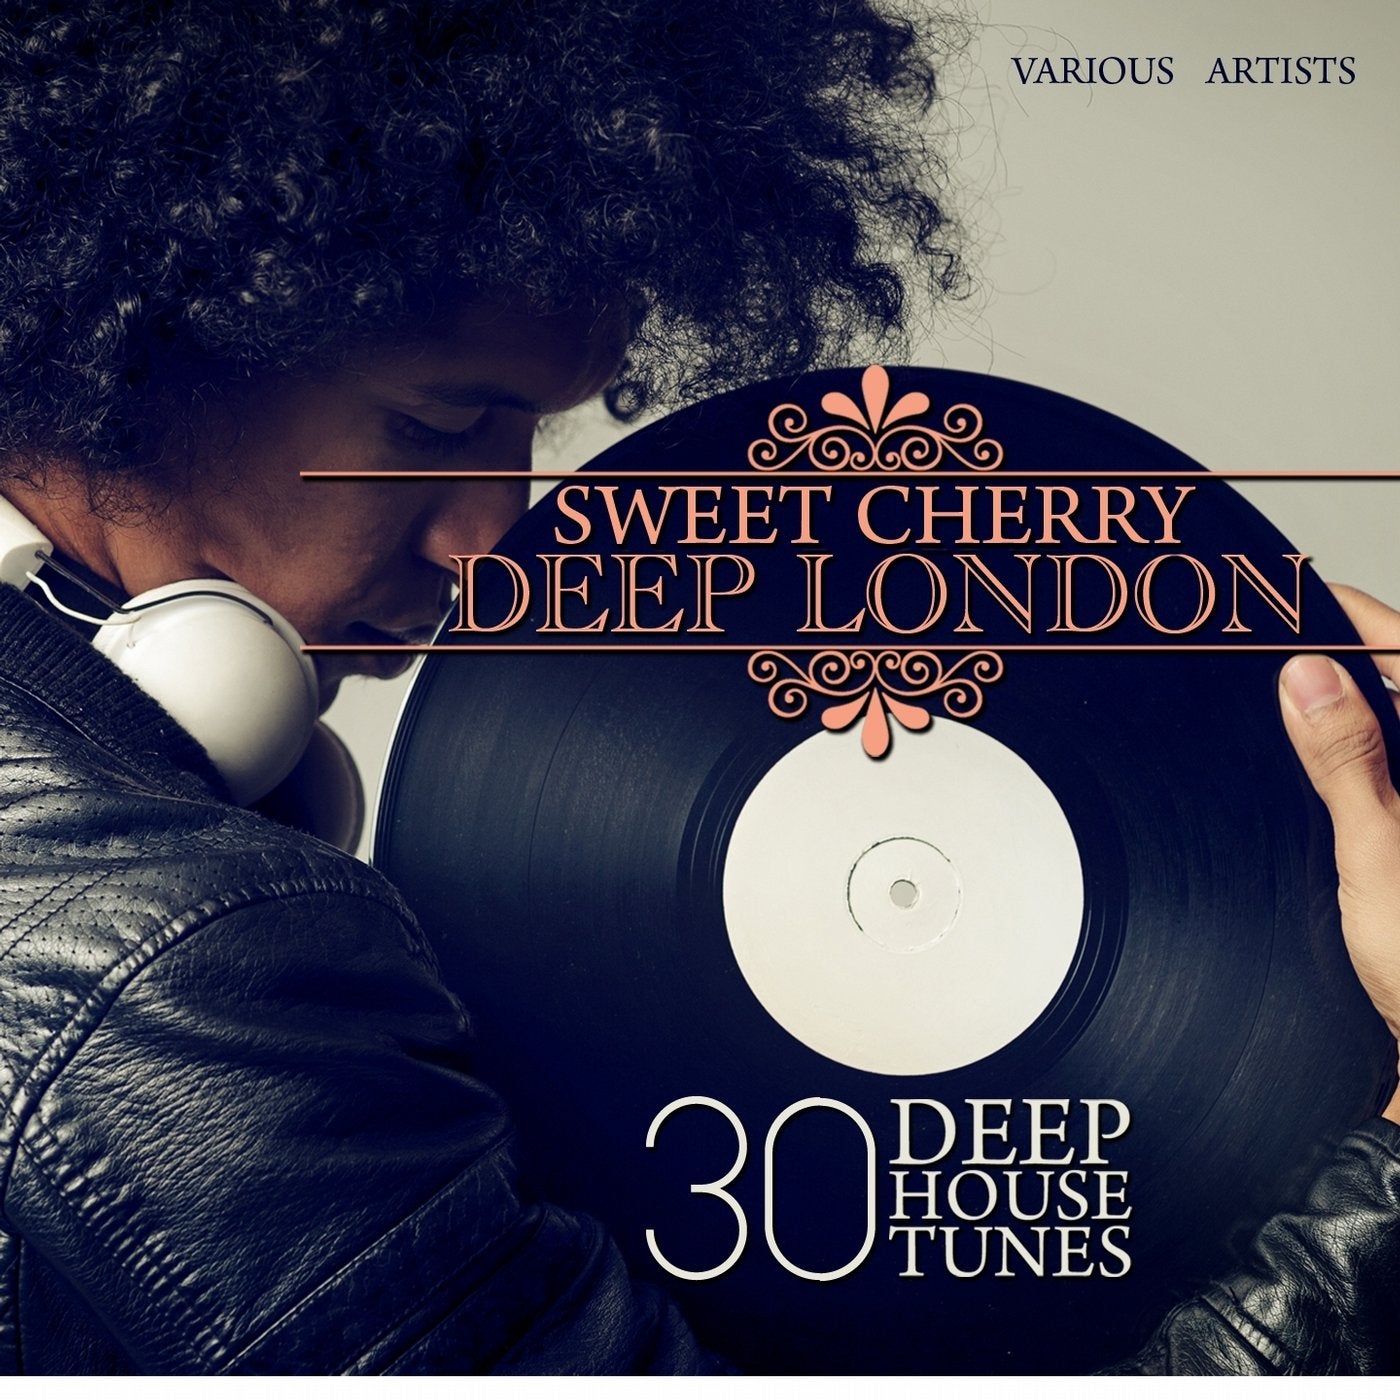 Sweet Cherry Deep London (30 Deep House Tunes)